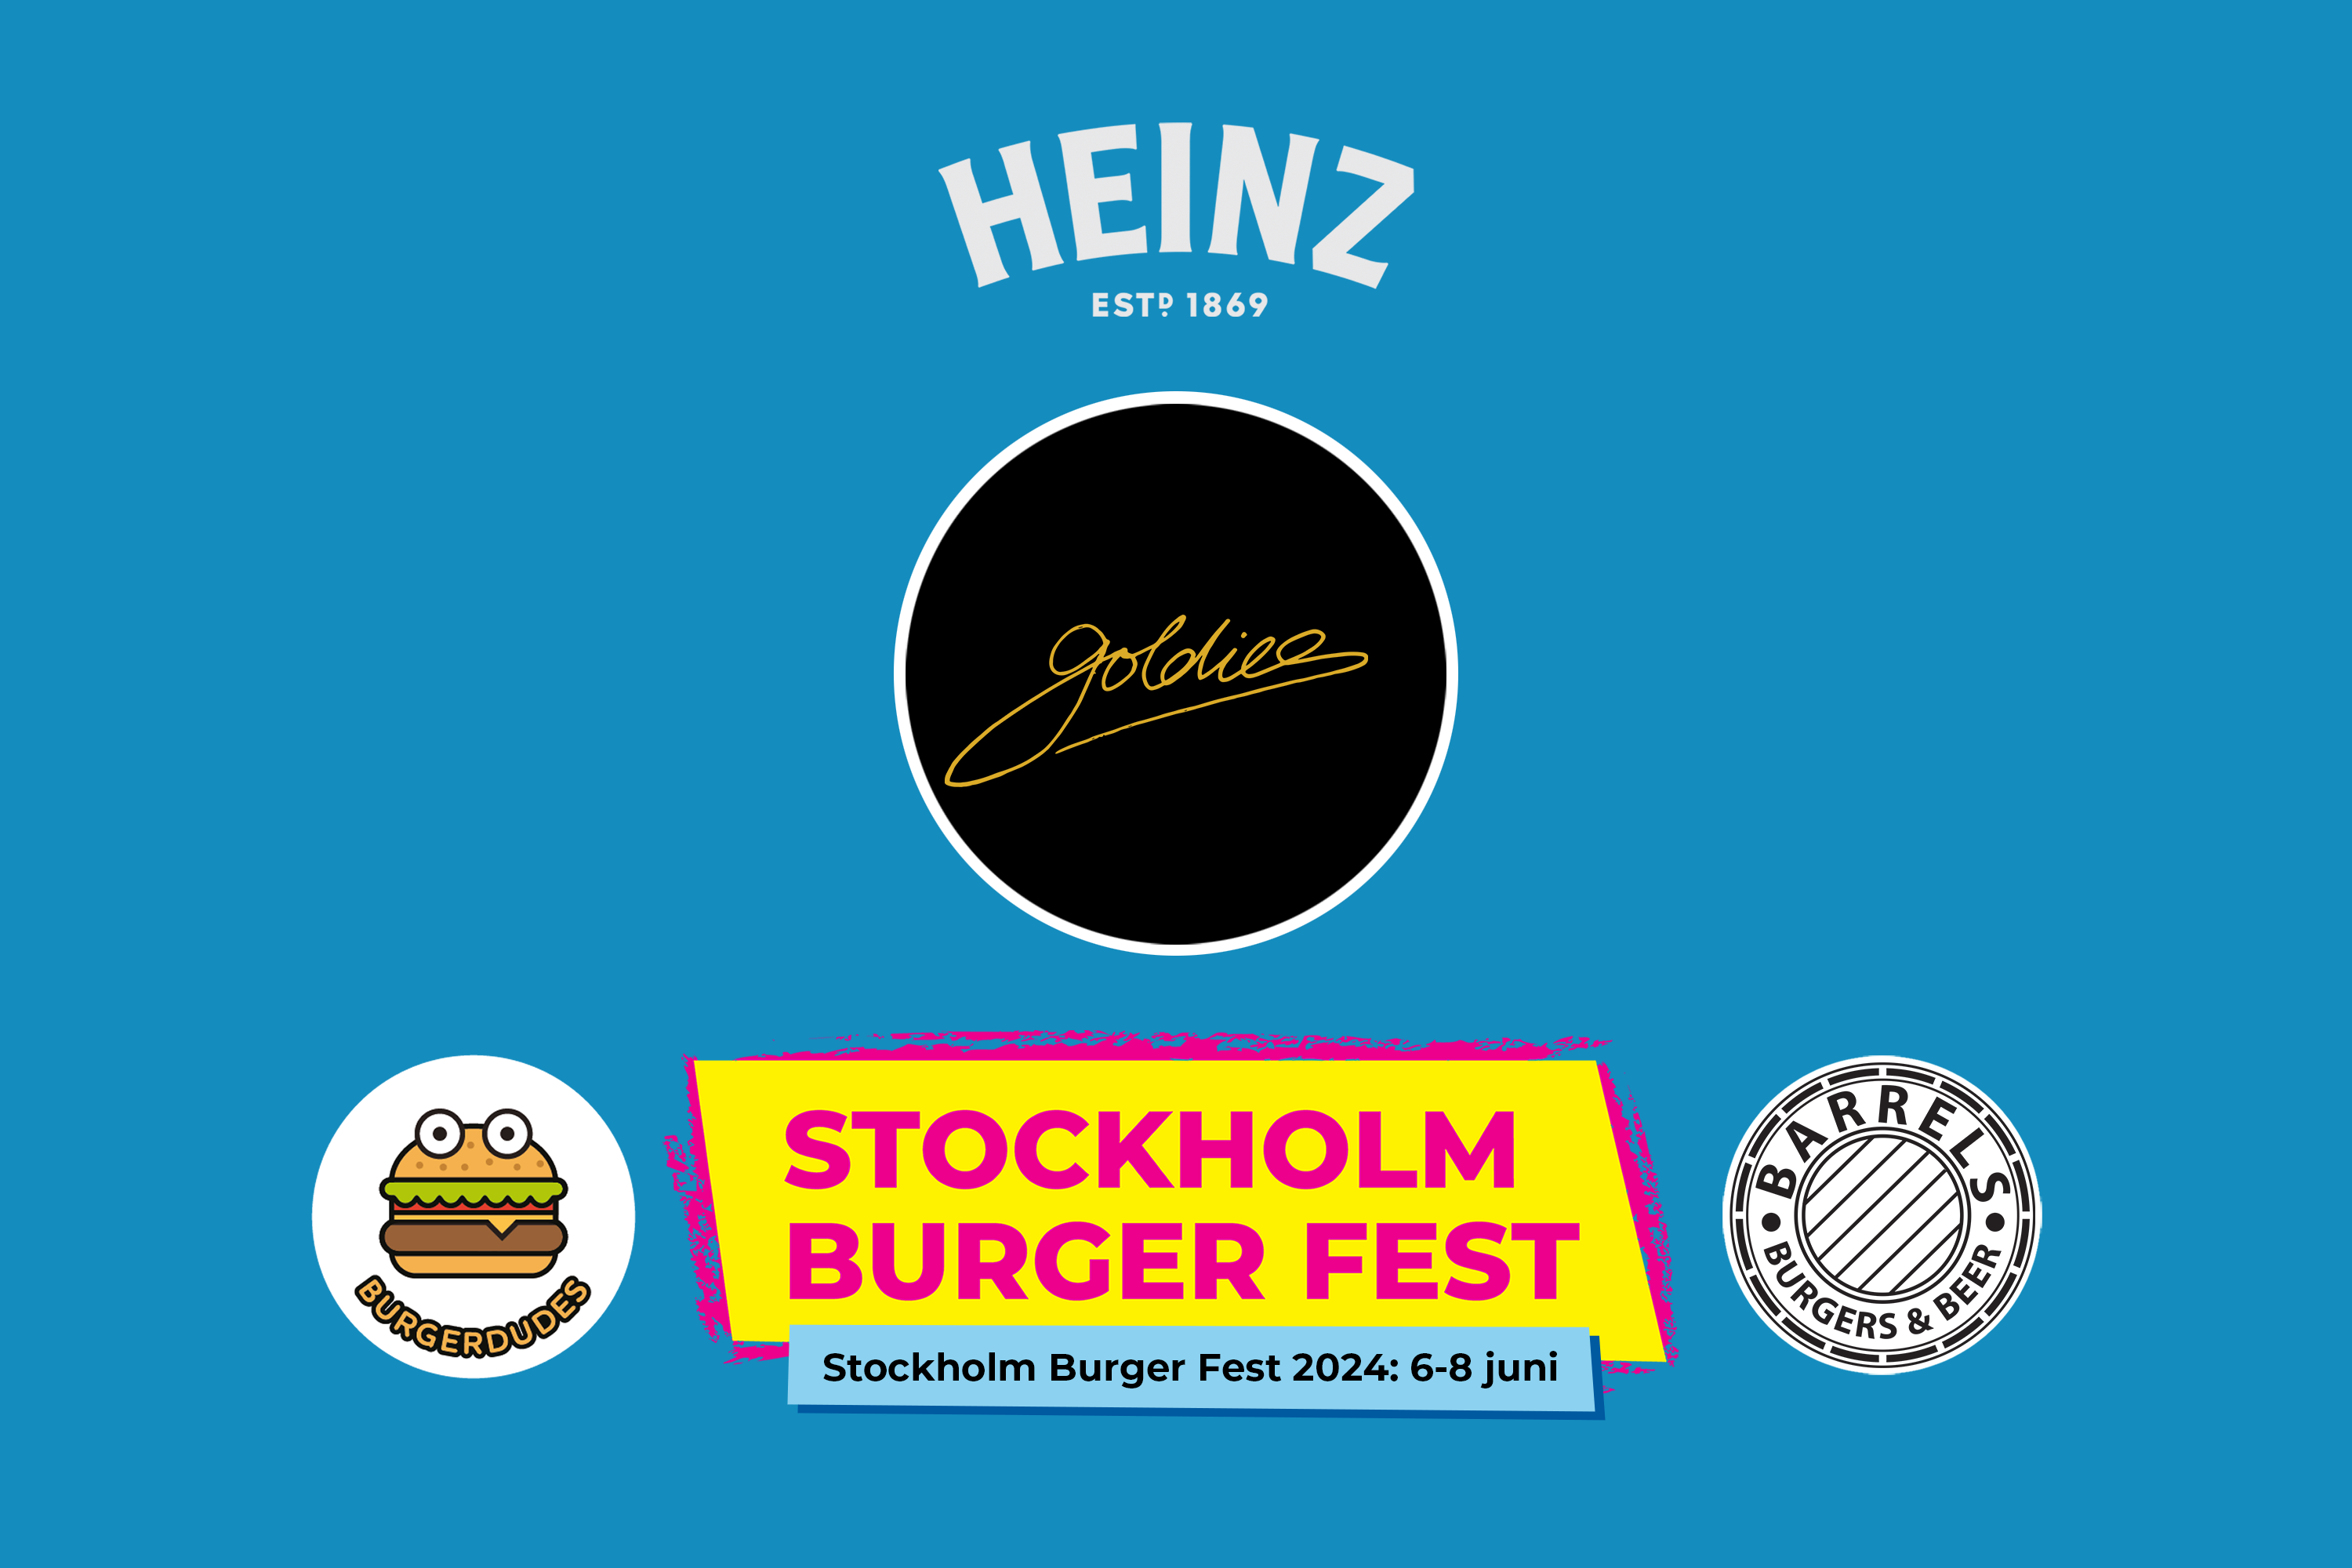 Stockholm Burger Fest 2024: Goldies